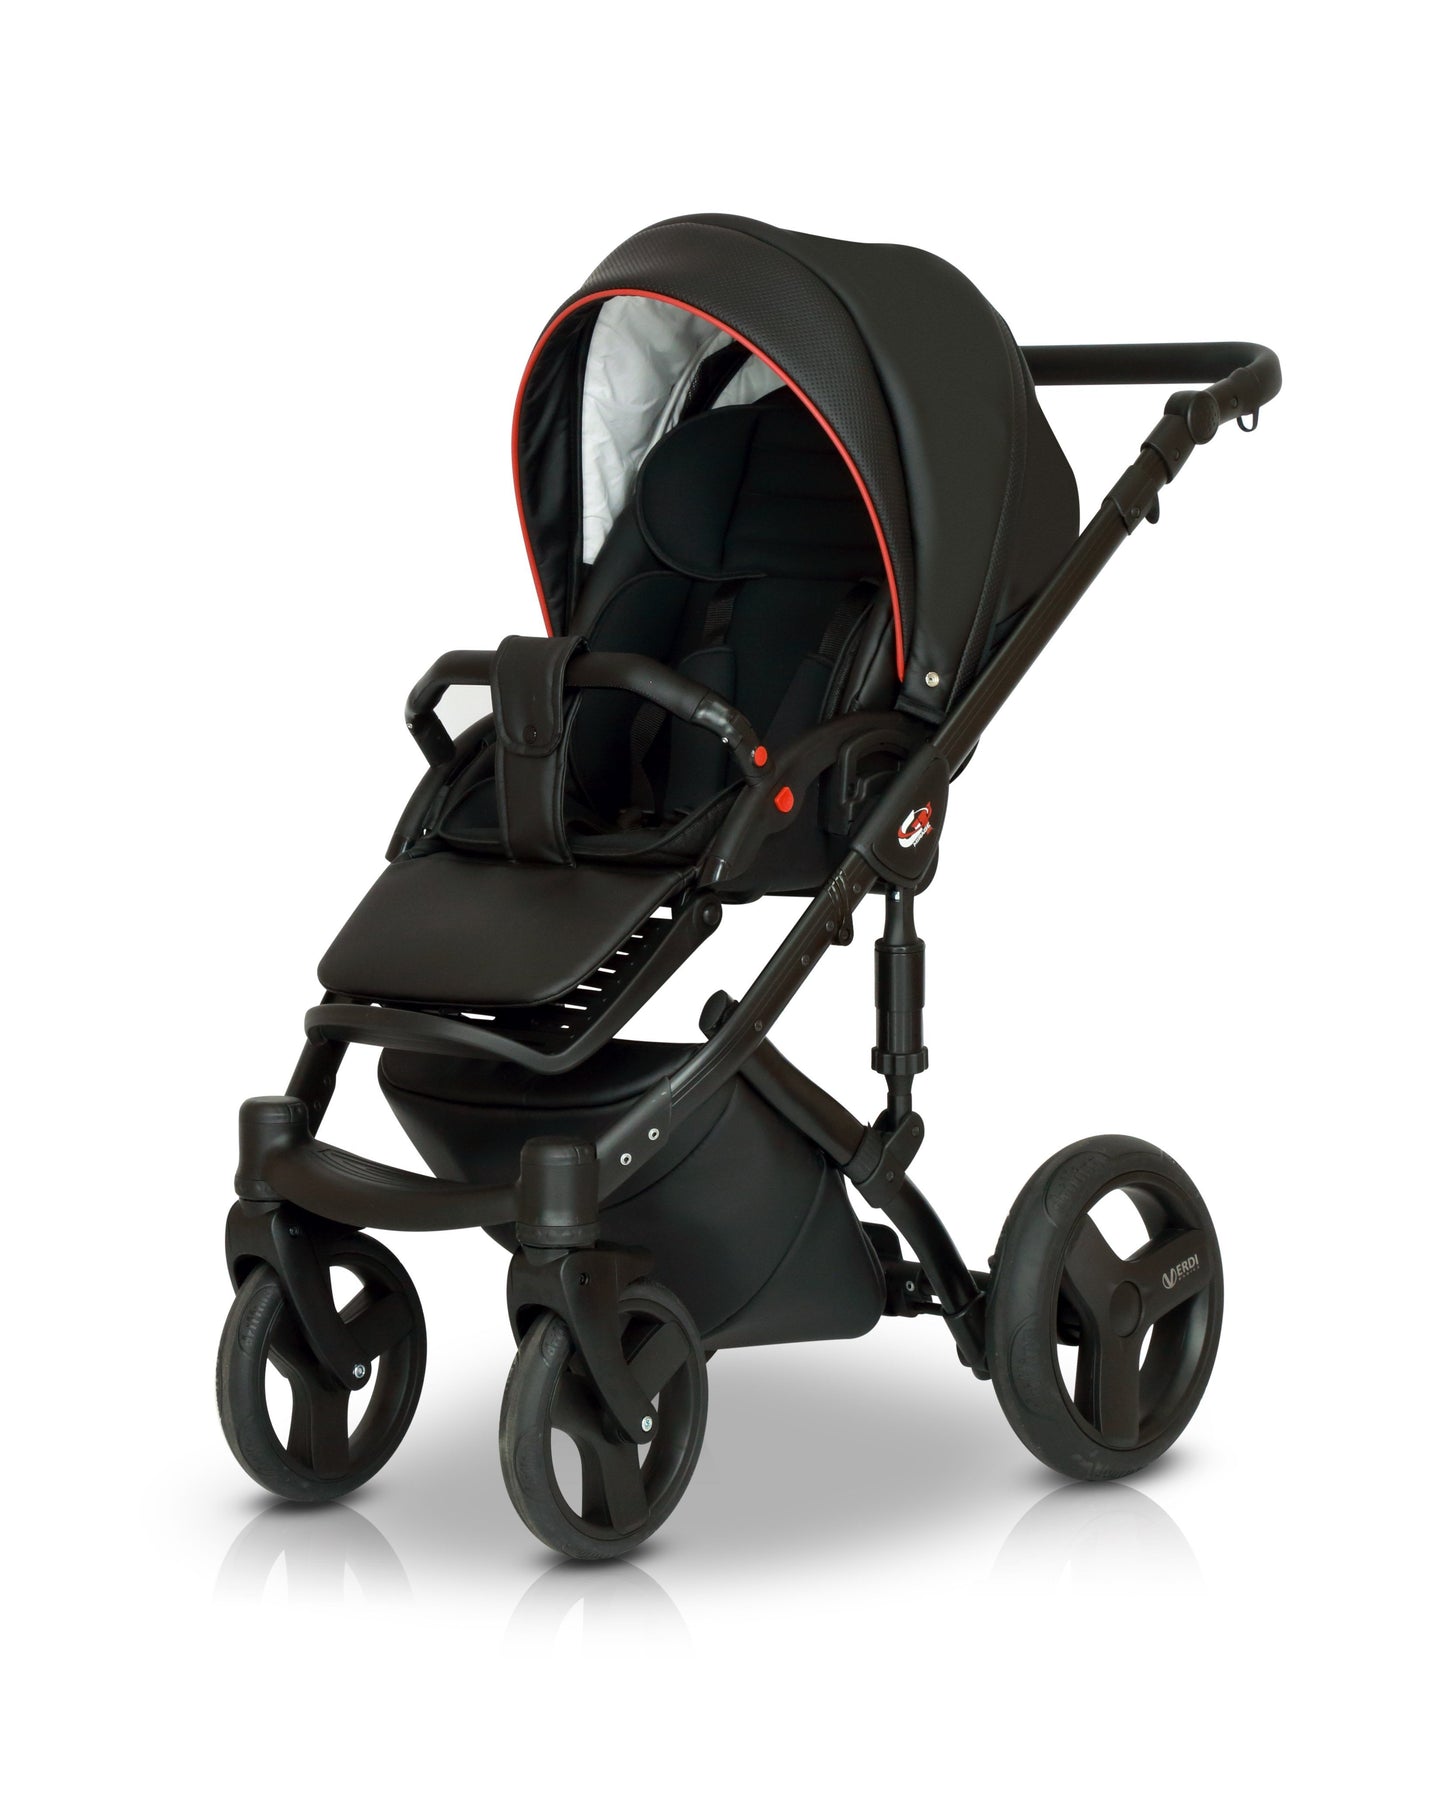 3 in 1 stroller in black | carrycot for newborn baby